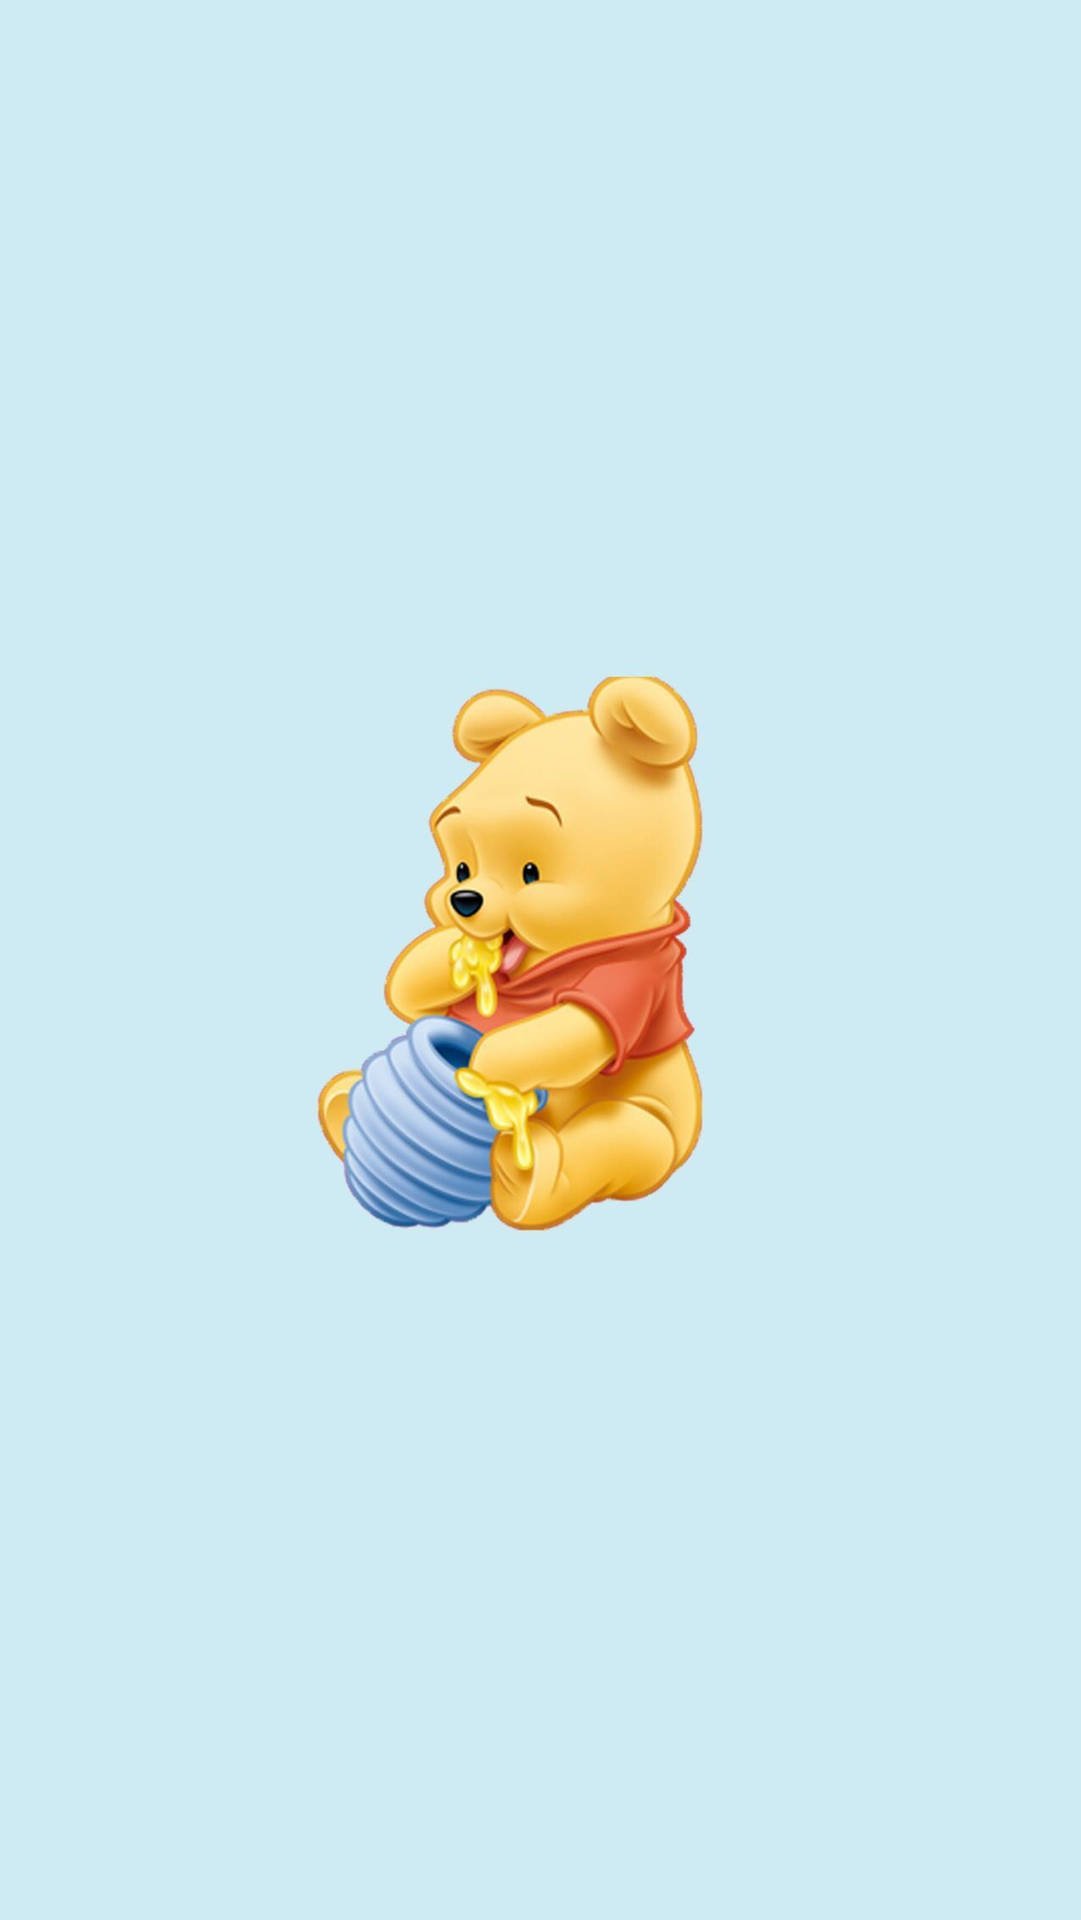 Cute Winnie The Pooh Eating Honey